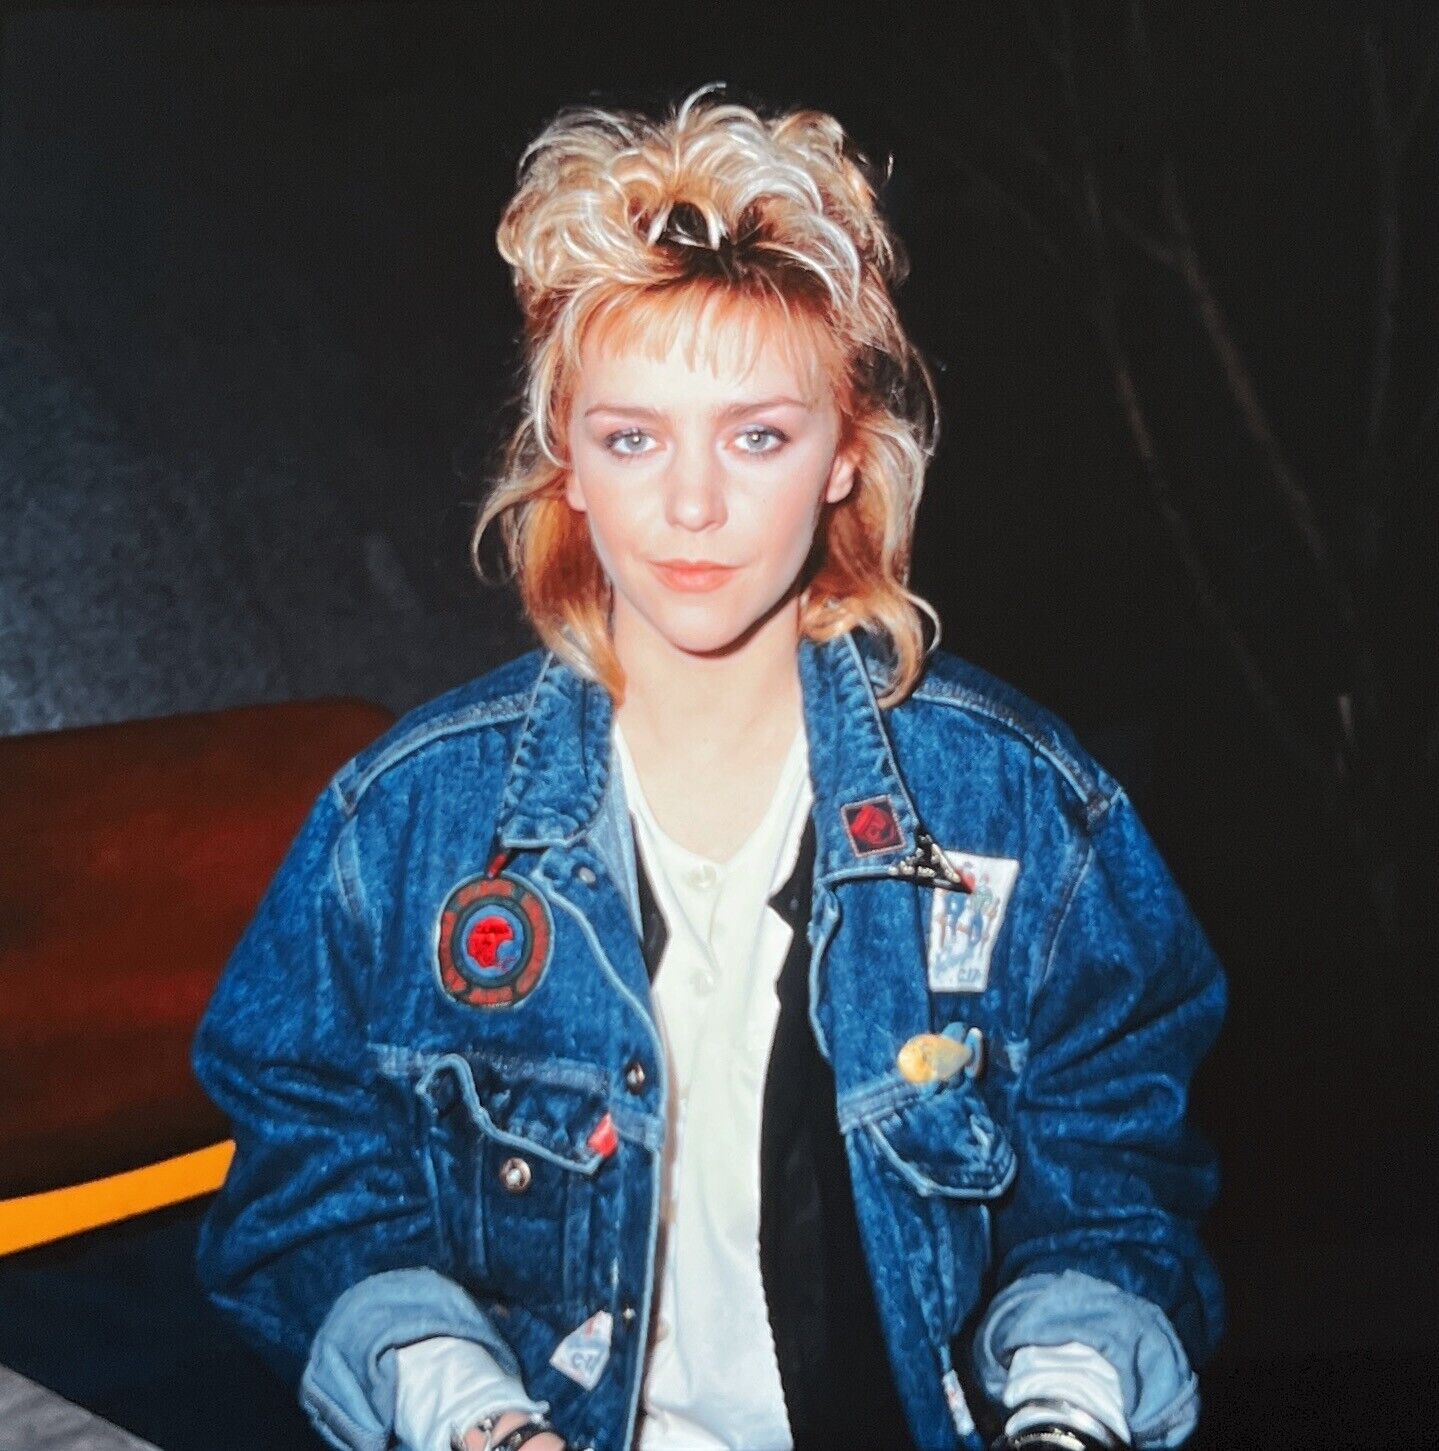 UK1-525 LESLIE ASH Young Blonde British Actress 1986 Orig 2x2Color Transparency